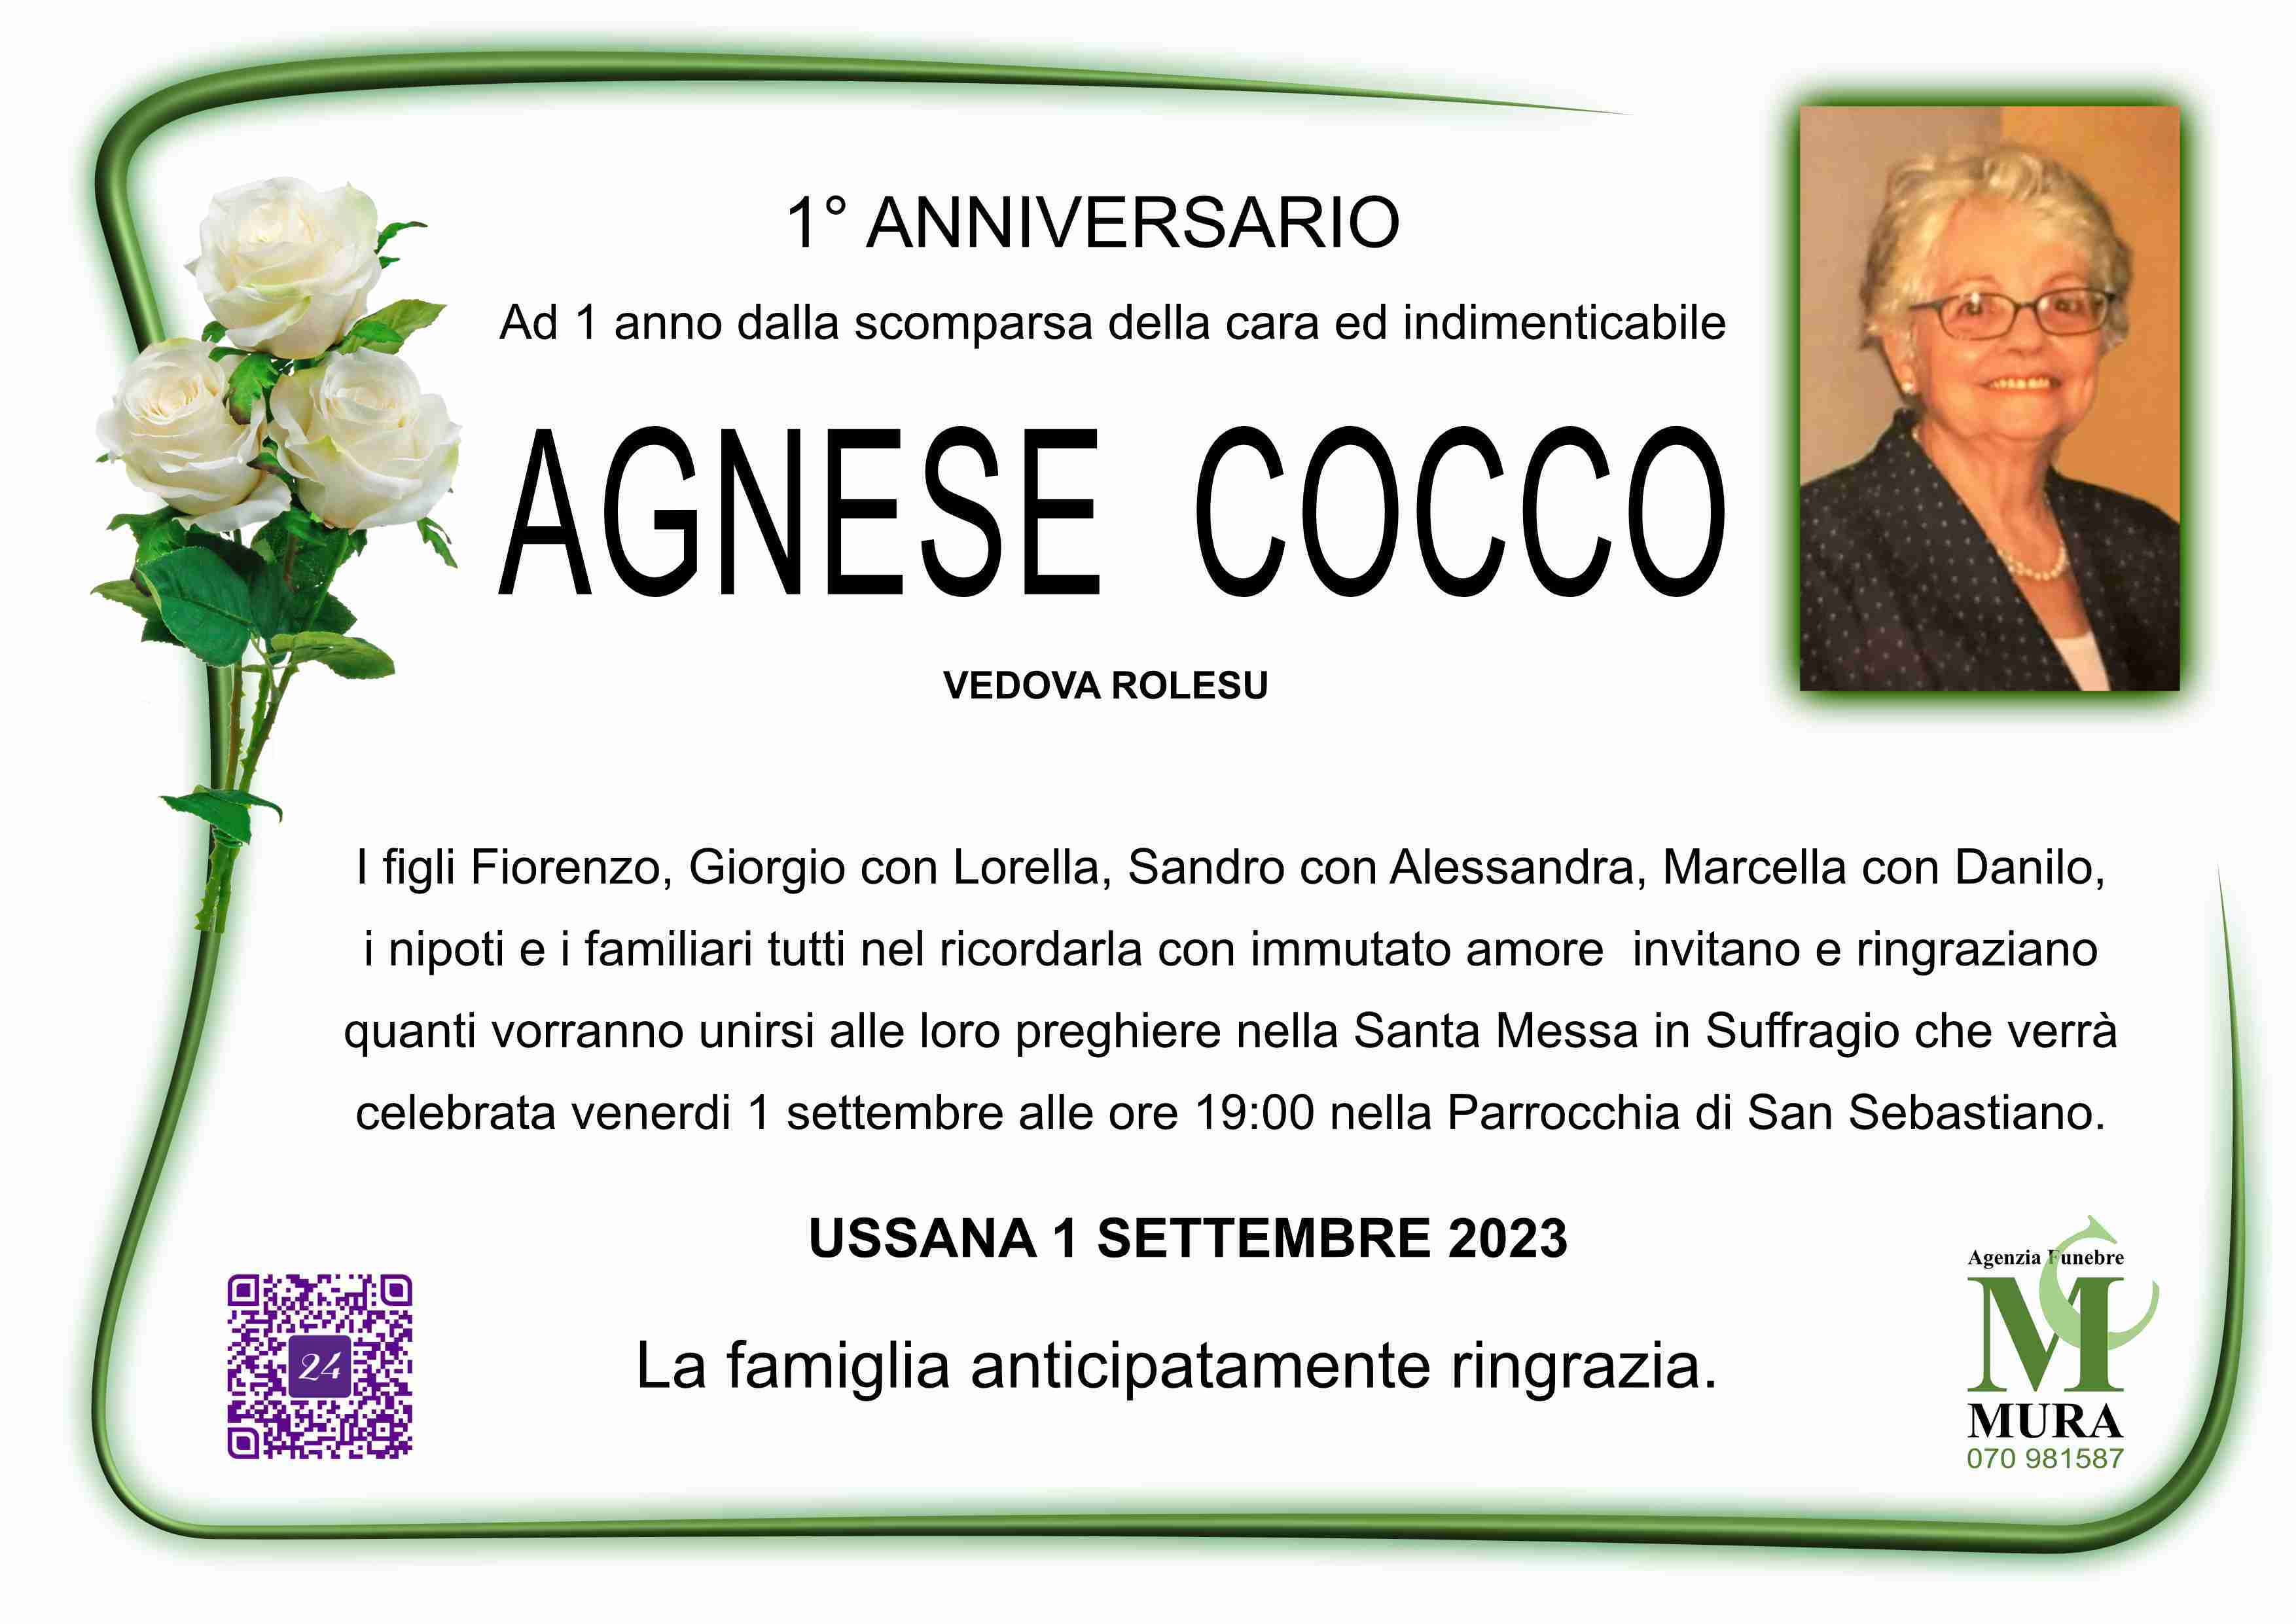 Agnese Cocco